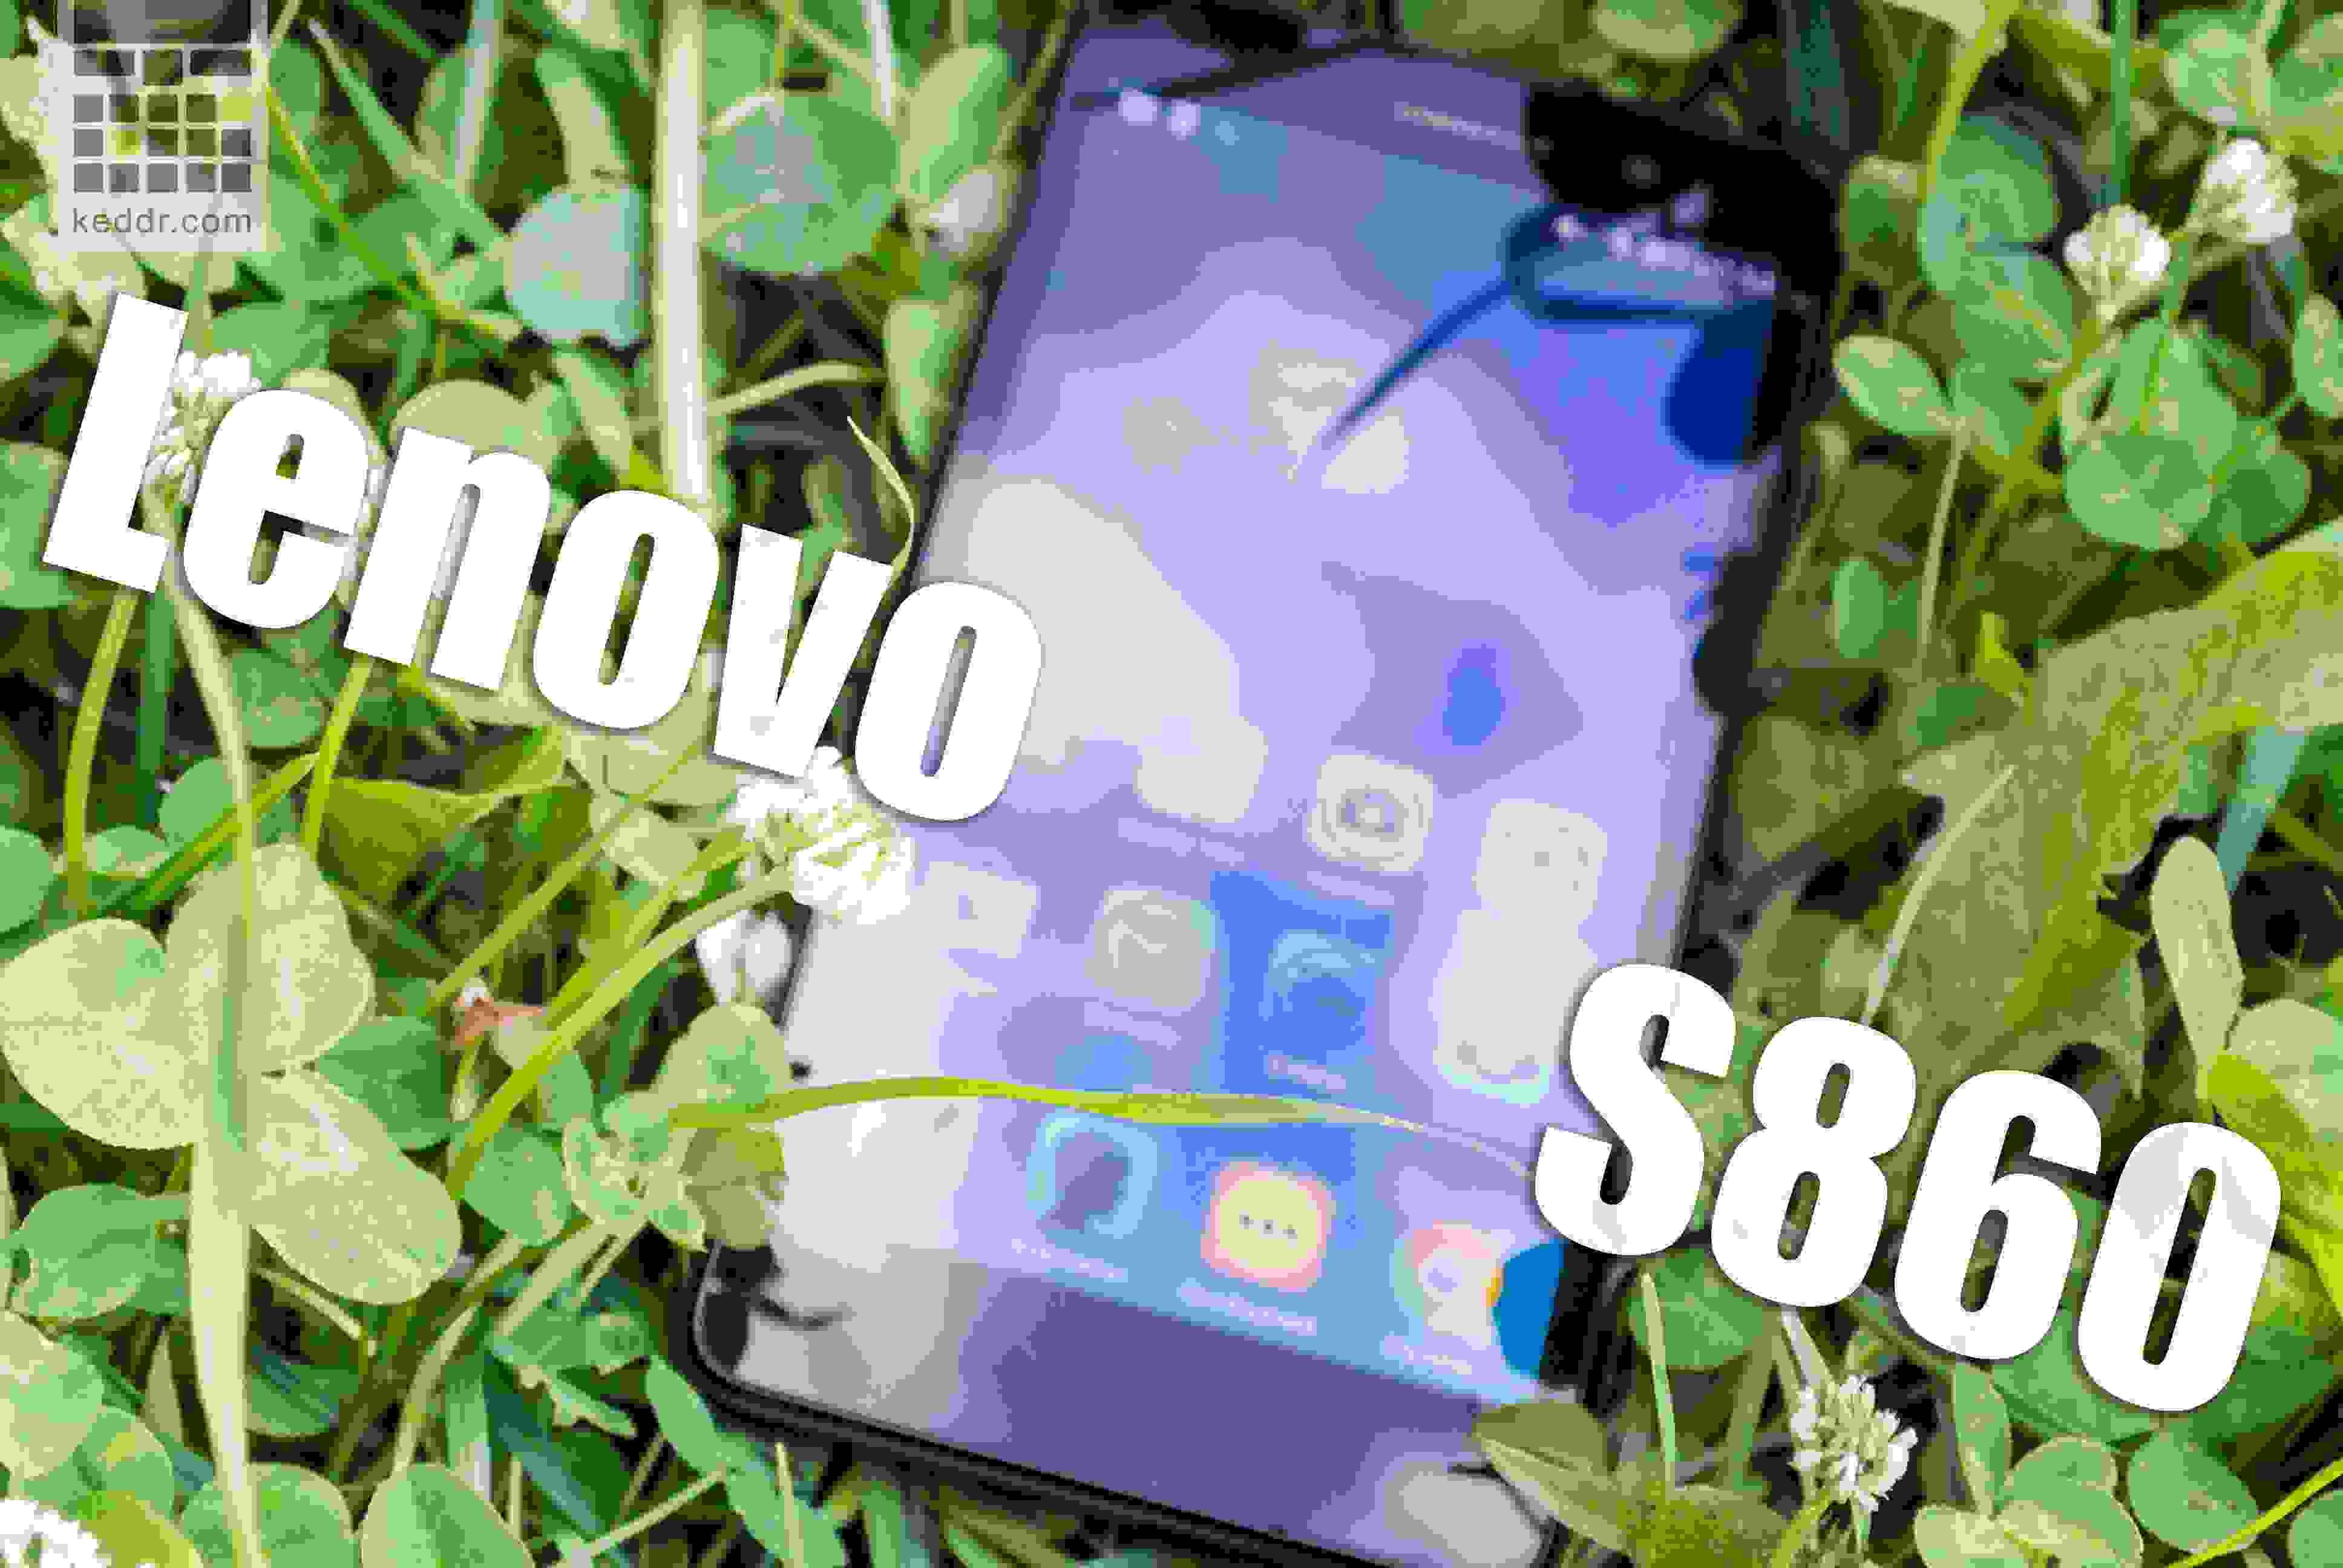 Обзор Lenovo IdeaPhone S860 — брутал, металл и автономность